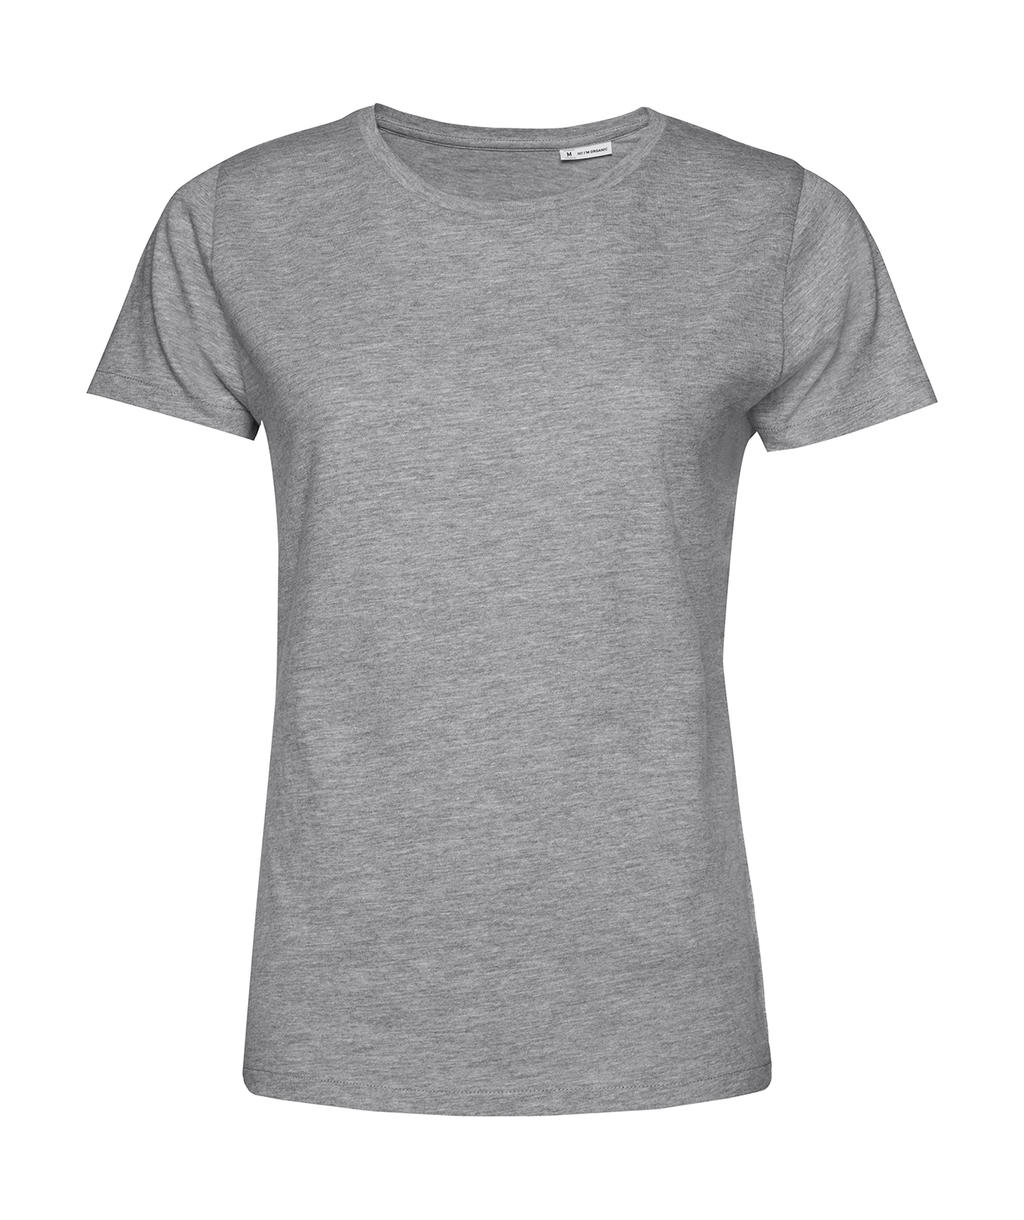 Dámske tričko #organic inspire E150 /women - heather grey